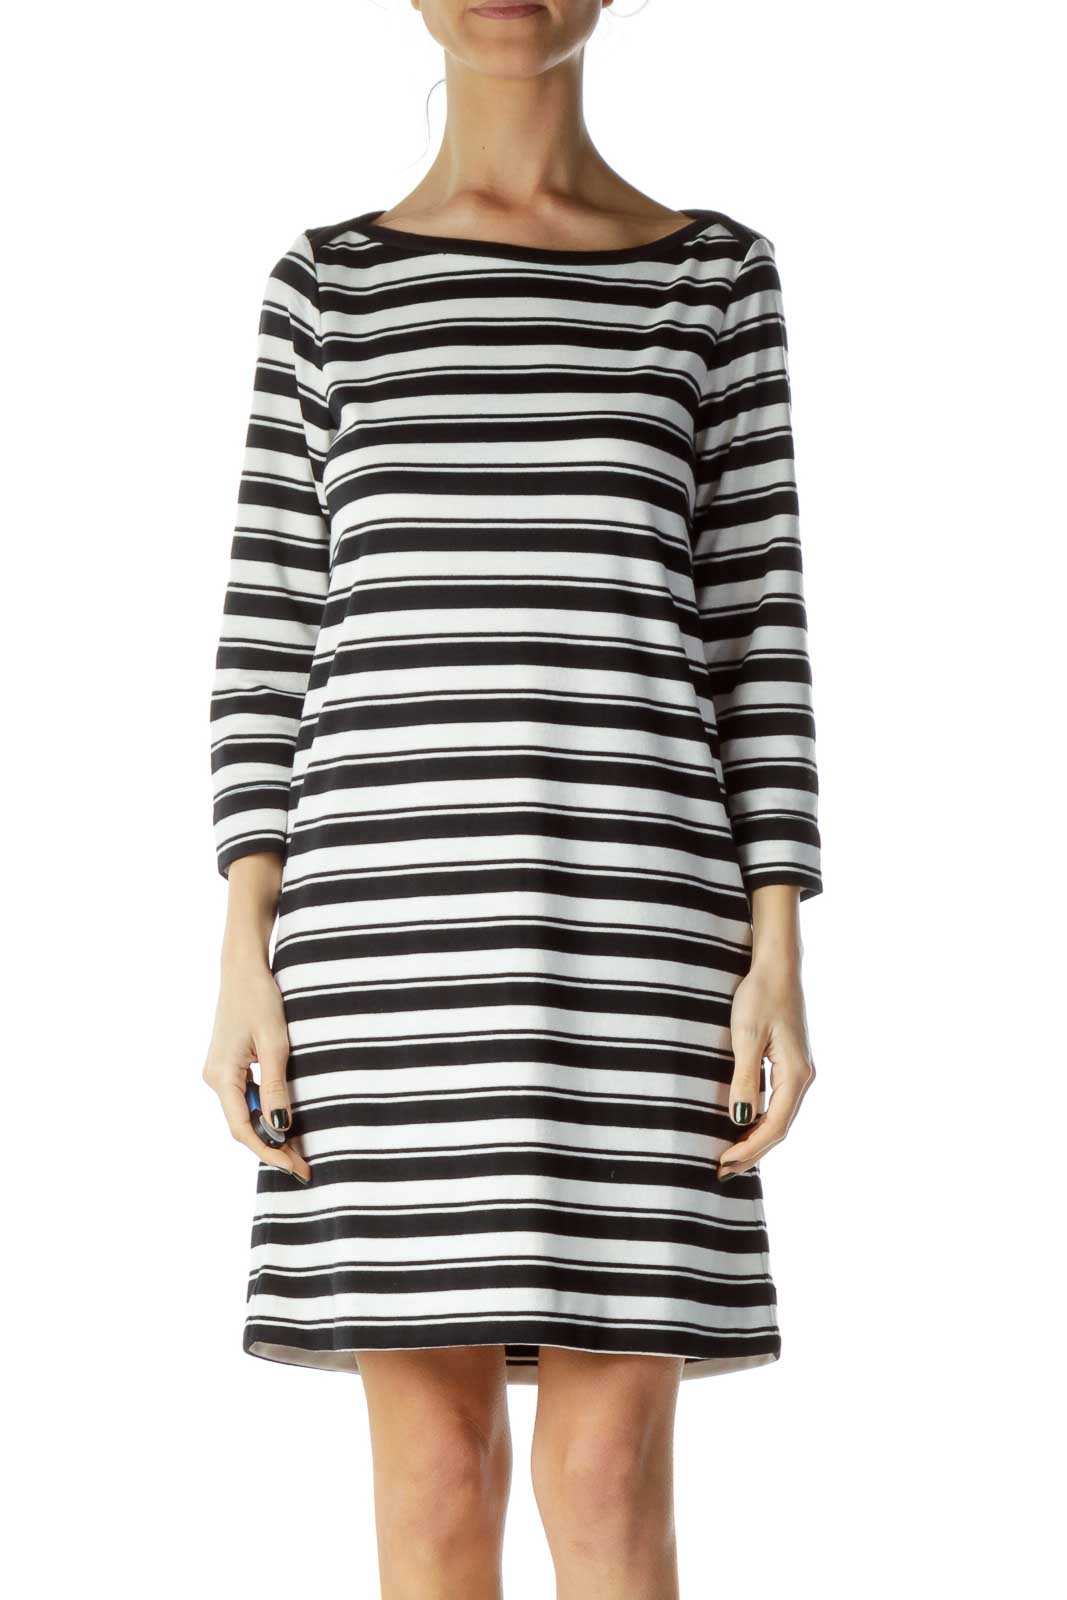 Black White Striped 3/4 Sleeve Knit Dress Front